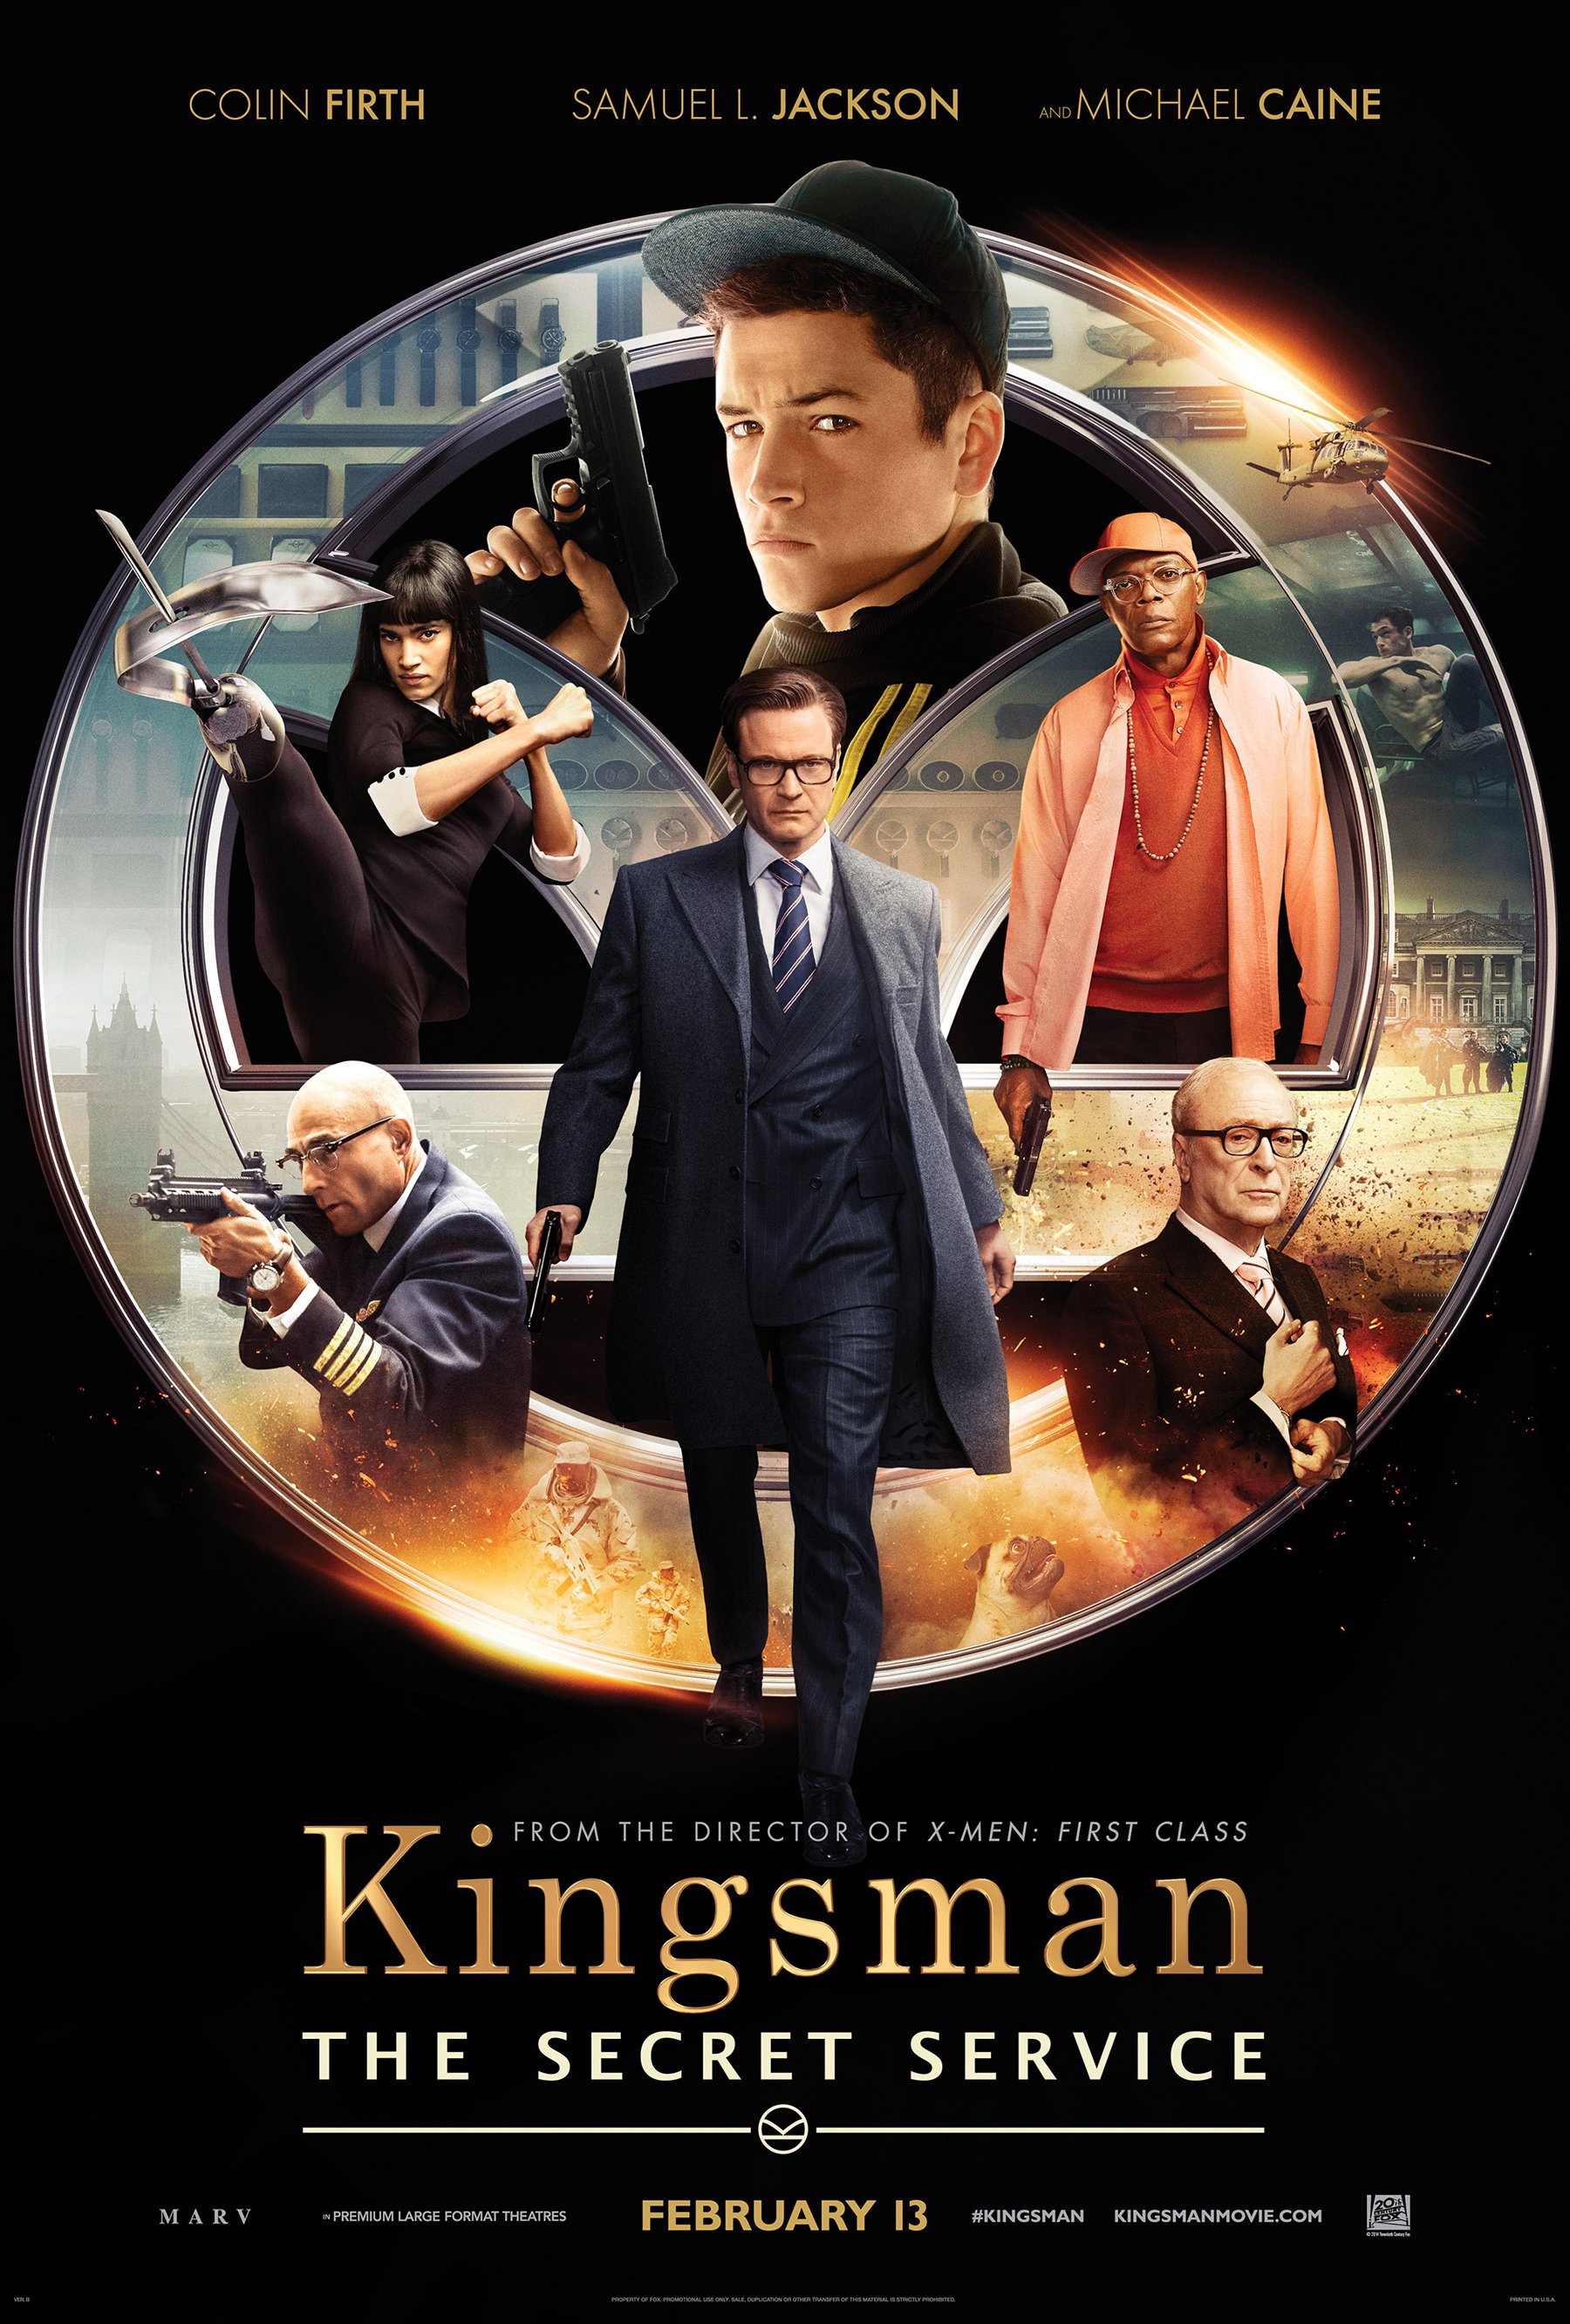 L'affiche du film Kingsman: Services secrets v.f.